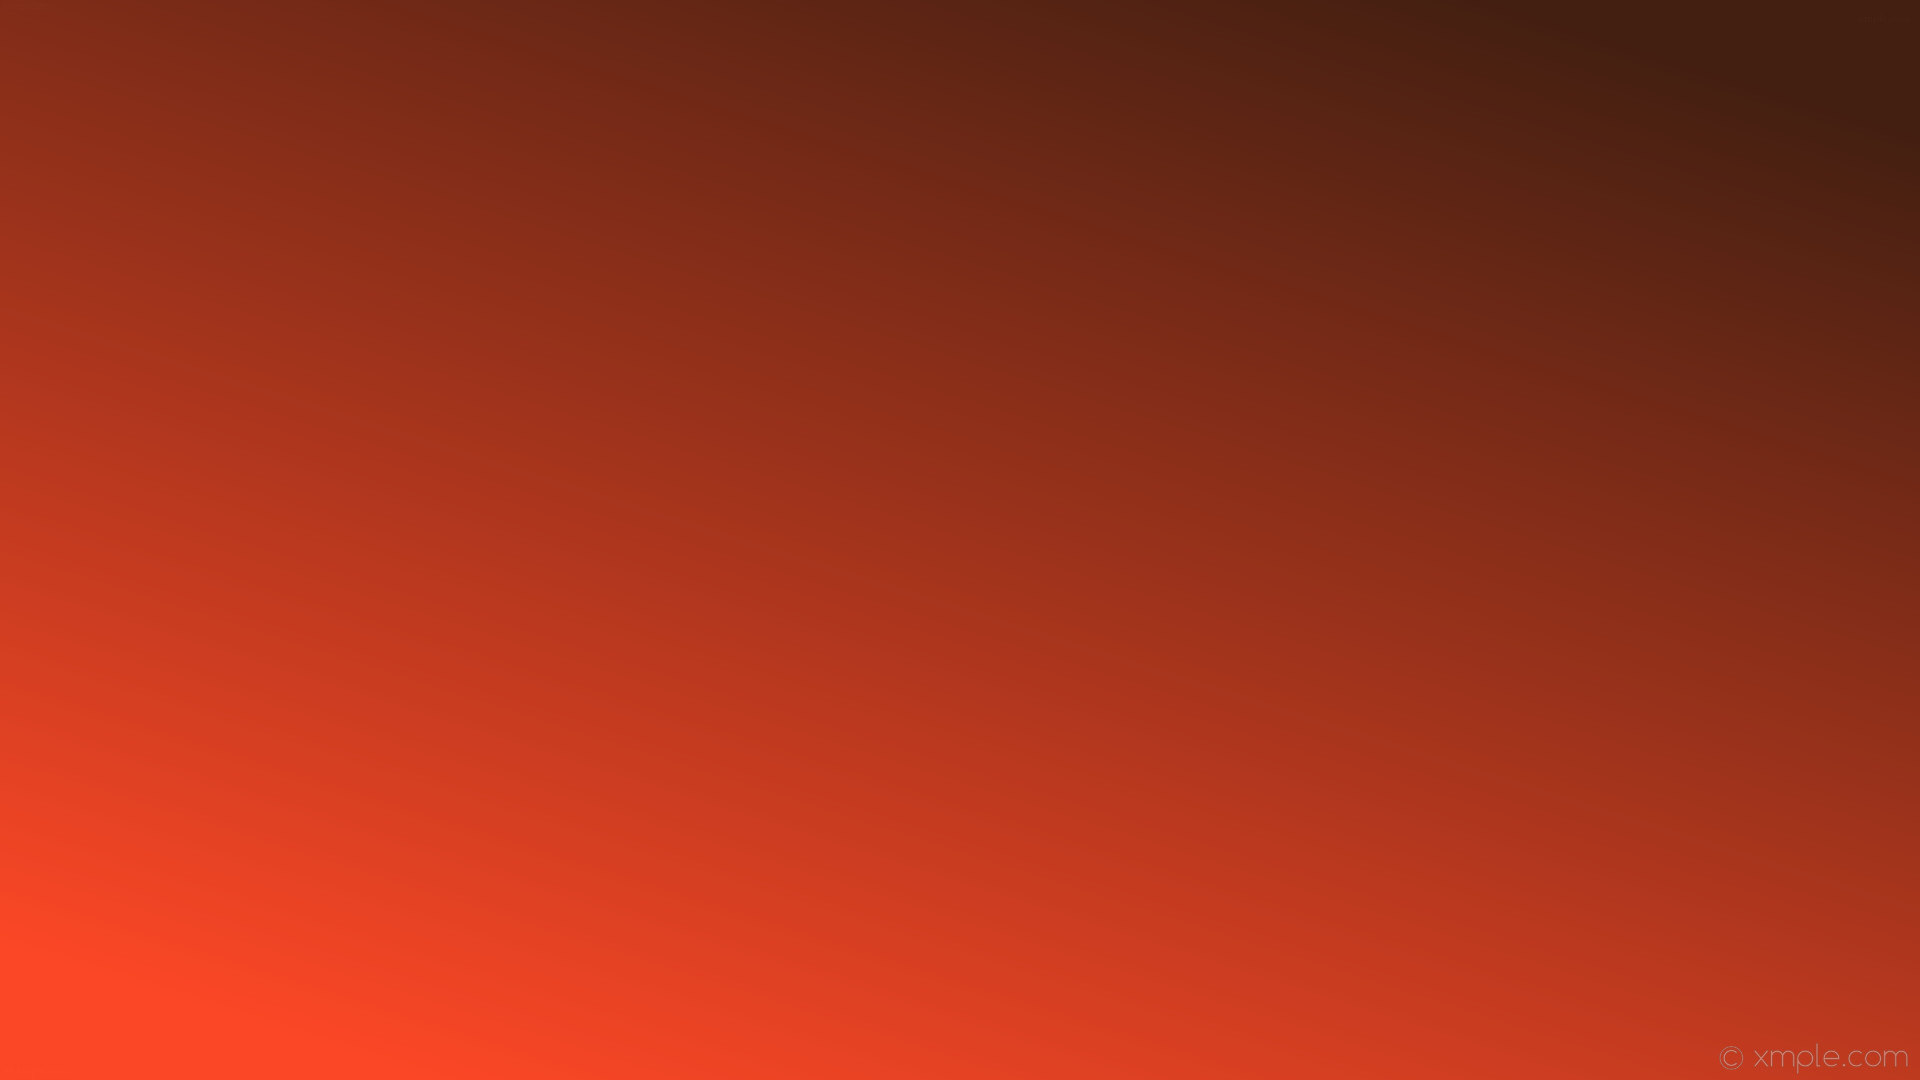 1920x1080 wallpaper linear orange gradient red dark orange #431f11 #fb4726 45Â°